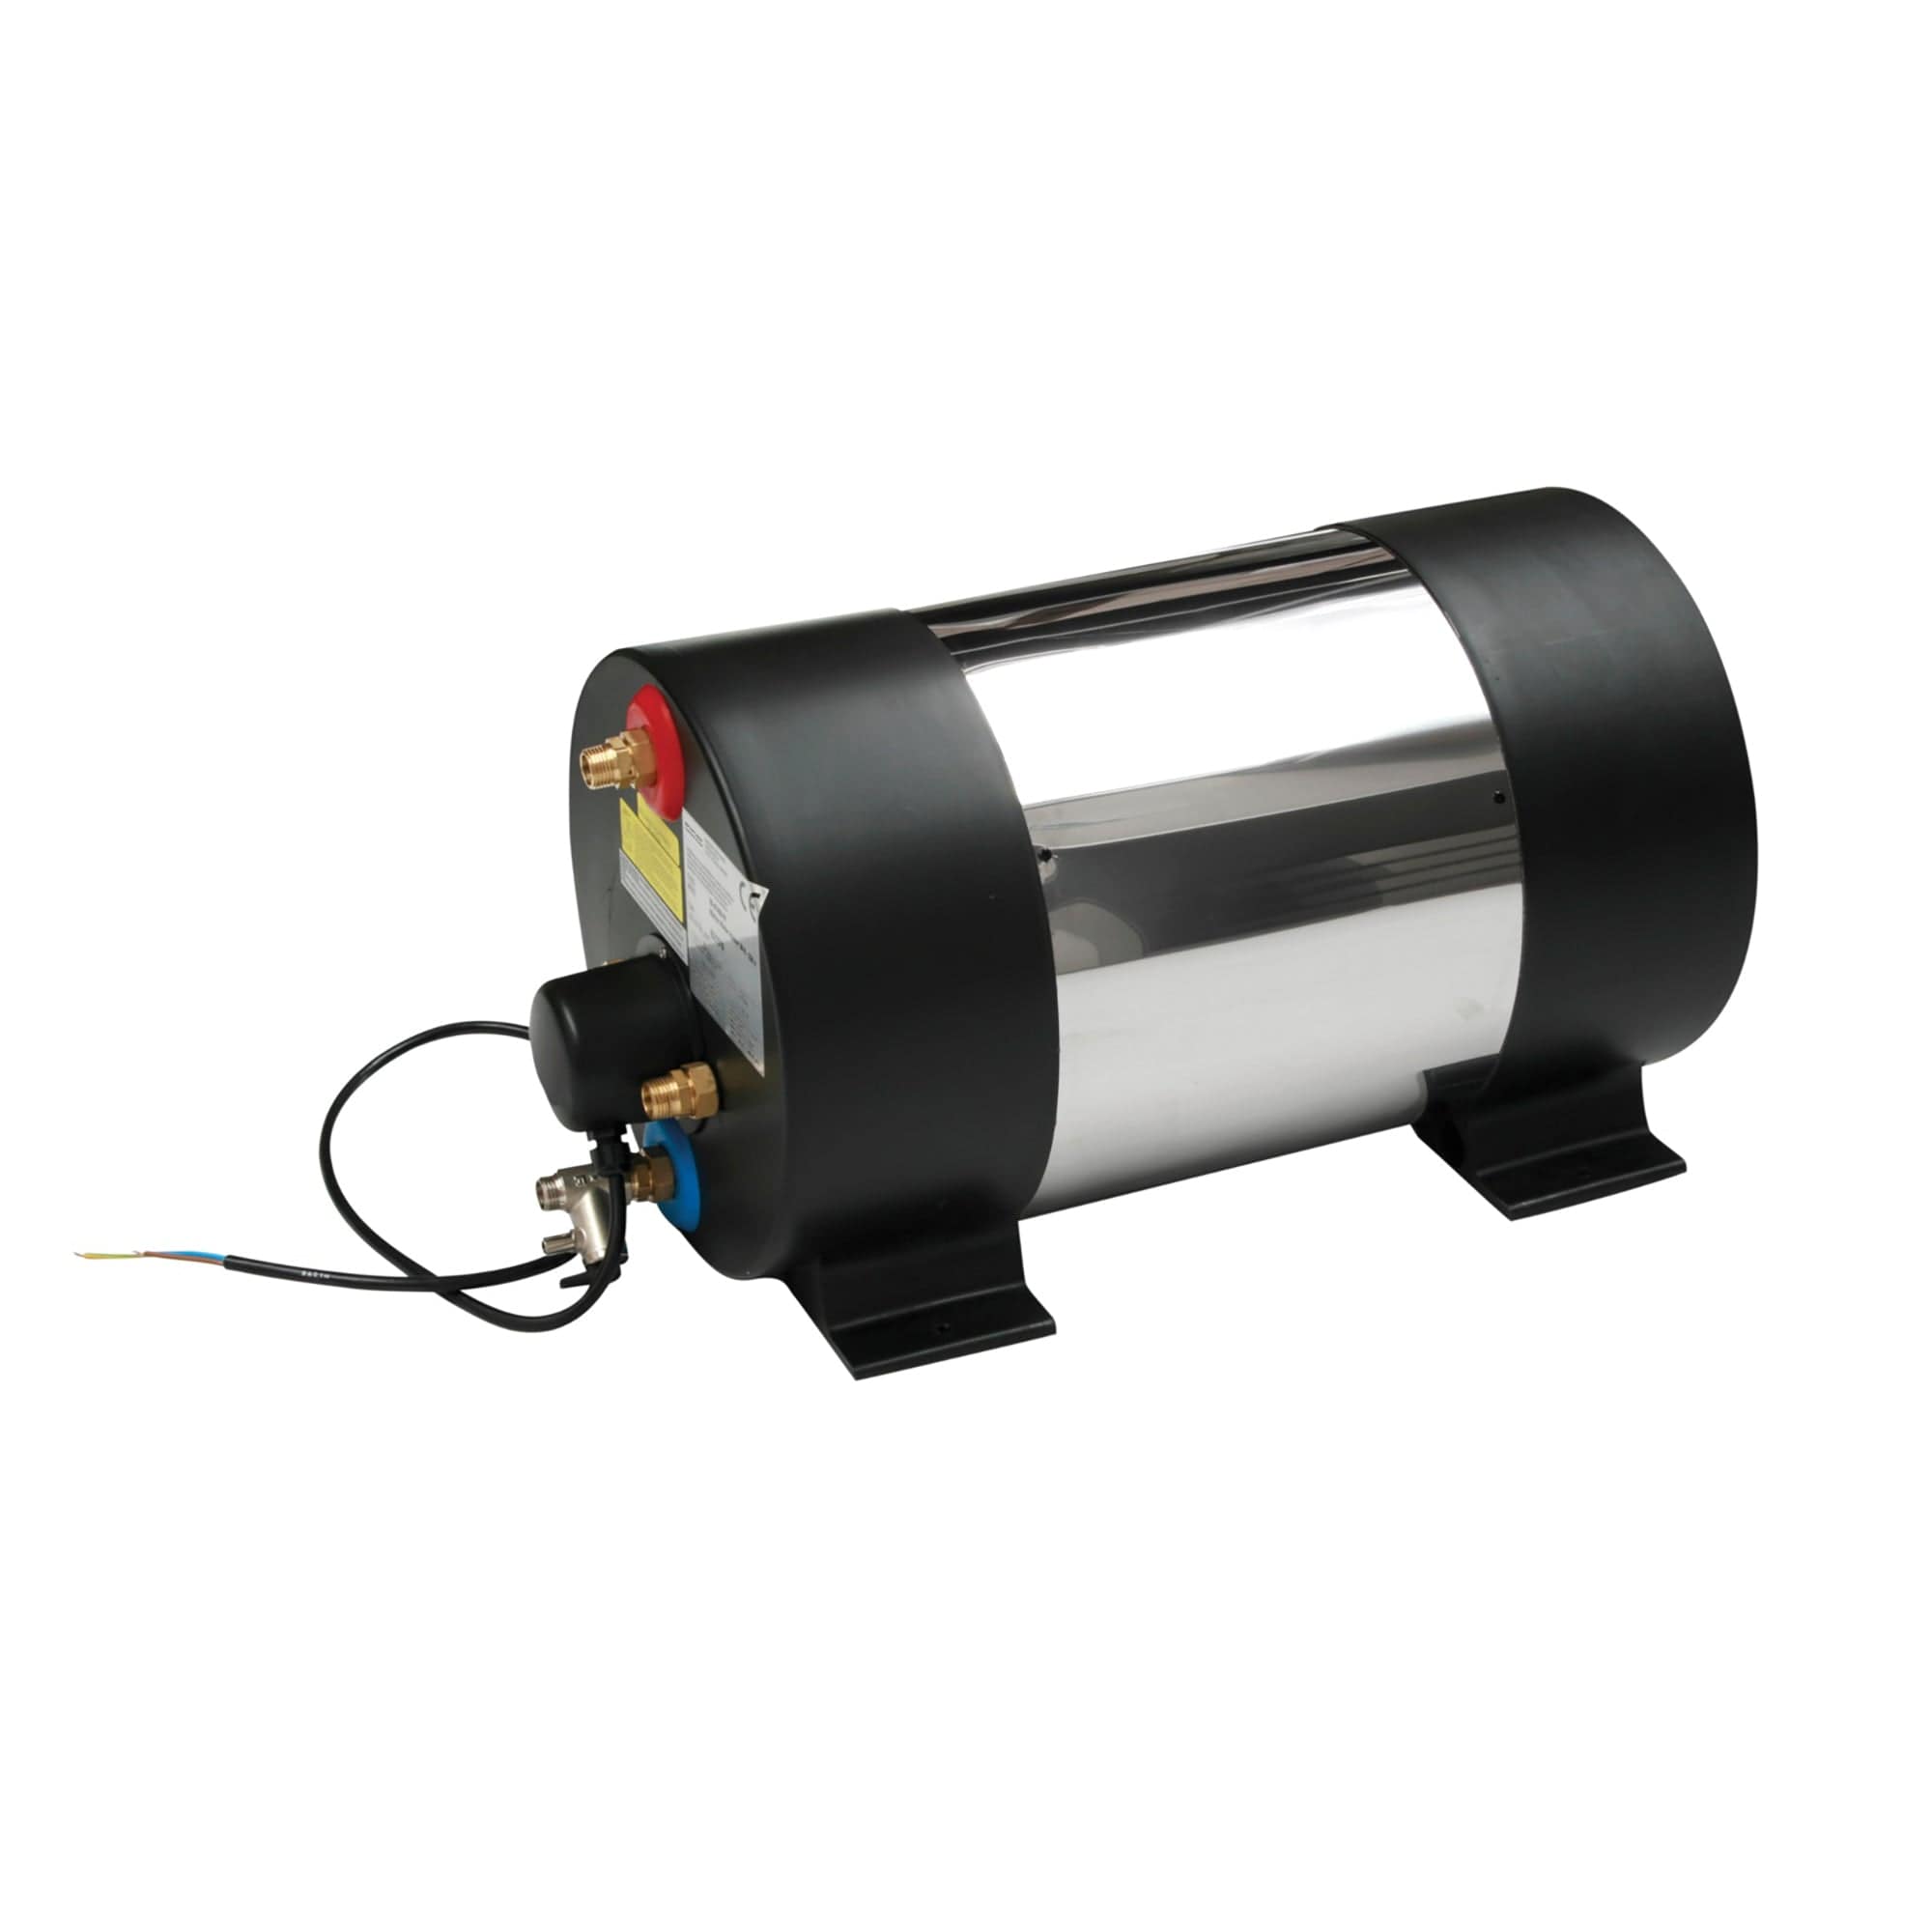 Johnson Pump 56-47456-02 AquaH Marine Water Heater, 1200W, 30L, 8 Gal, 120V, NPT